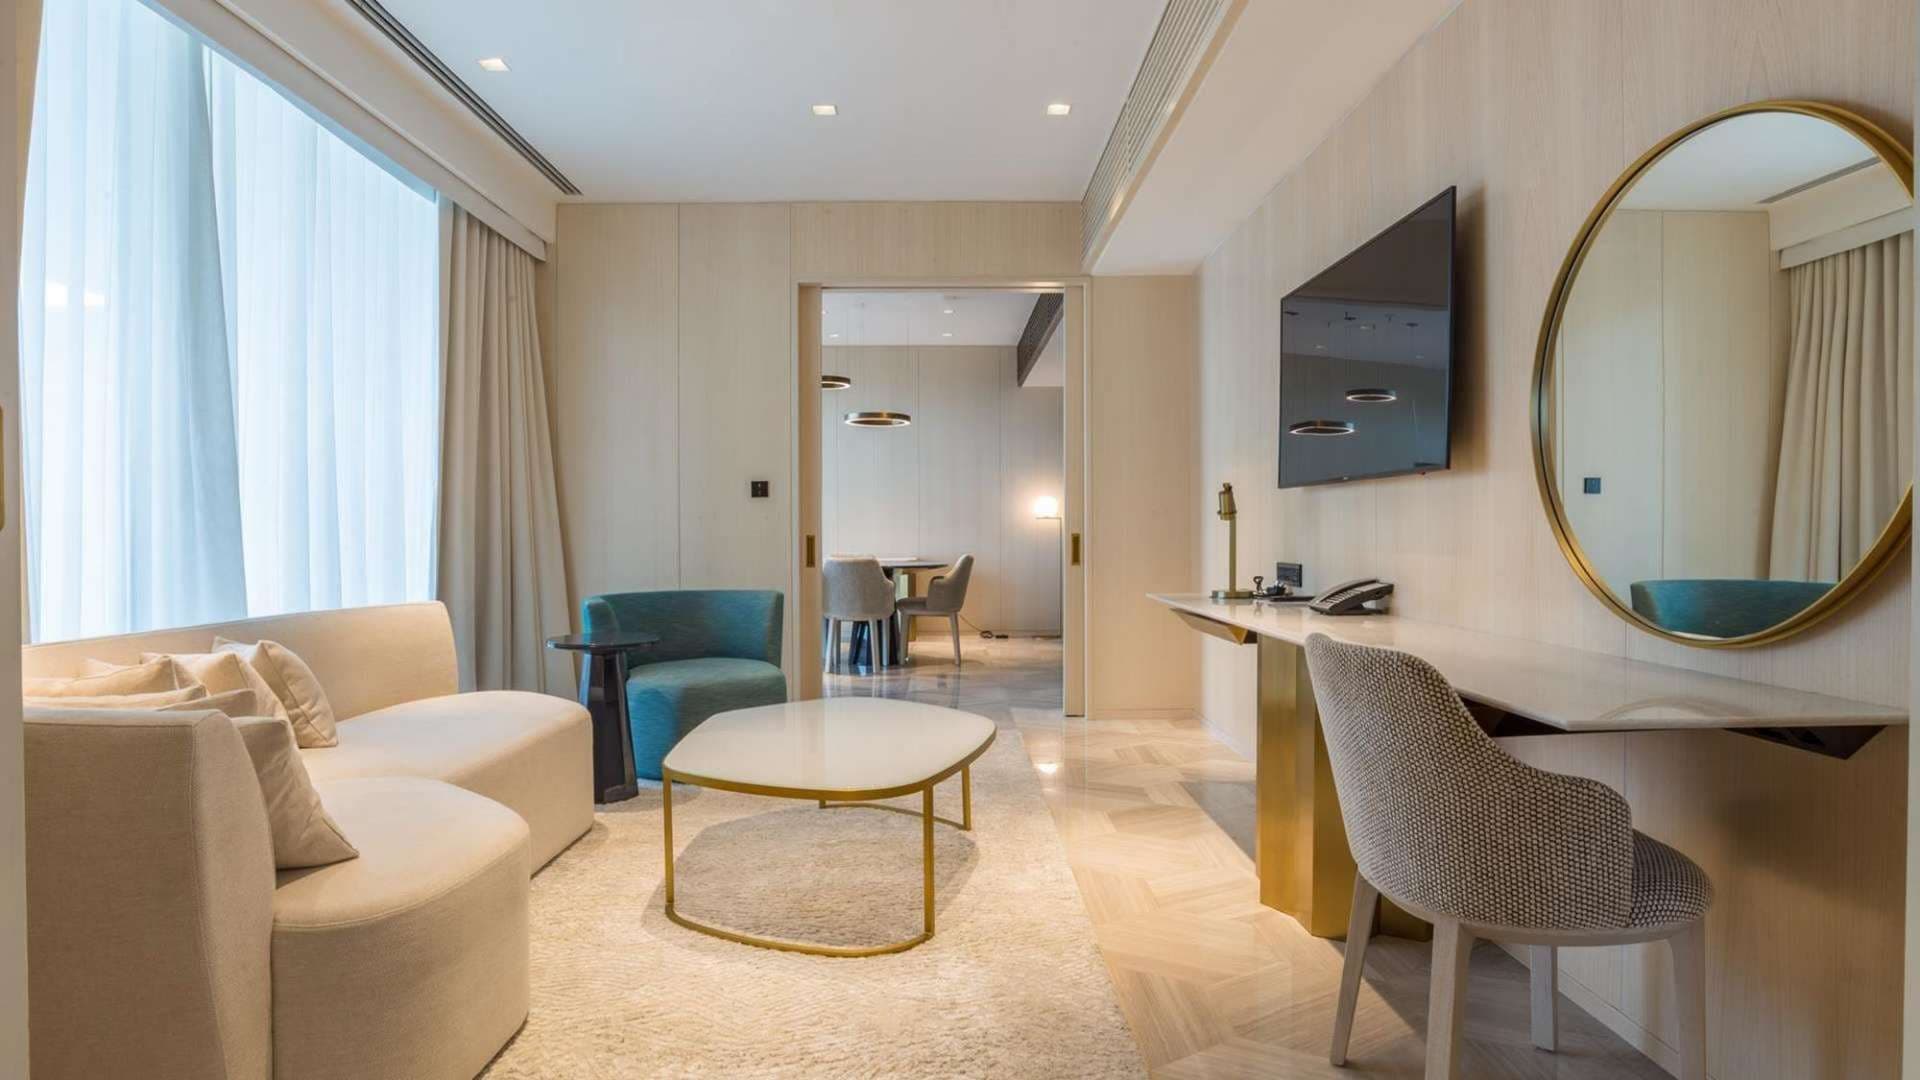 2 Bedroom Apartment For Rent Five Palm Jumeirah Lp07649 167e293549ef070.jpg